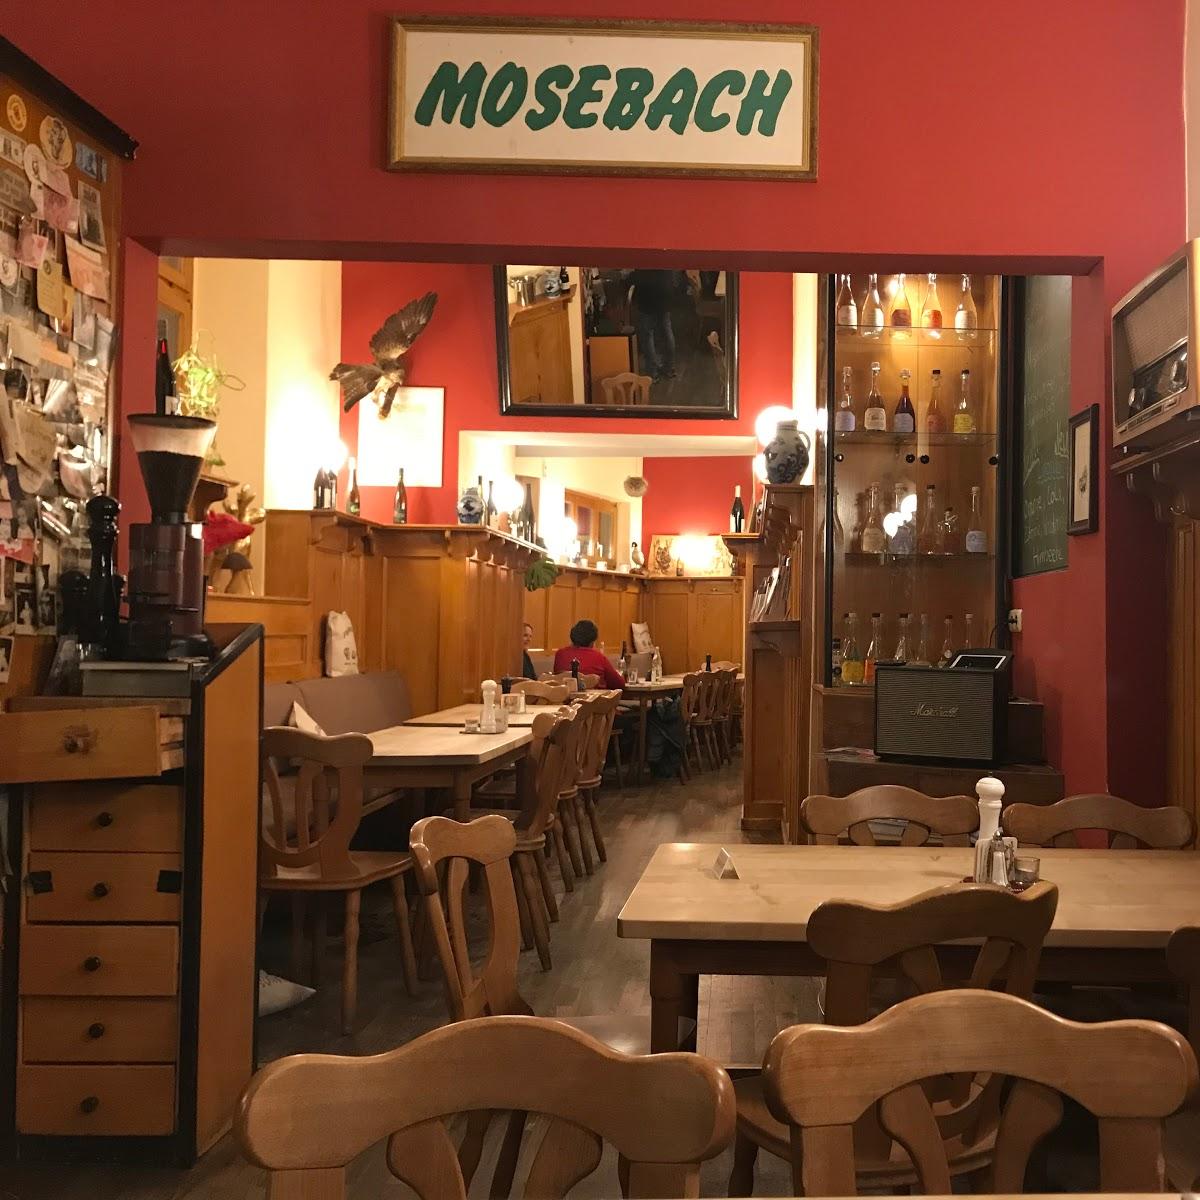 Restaurant "Mosebach" in Frankfurt am Main